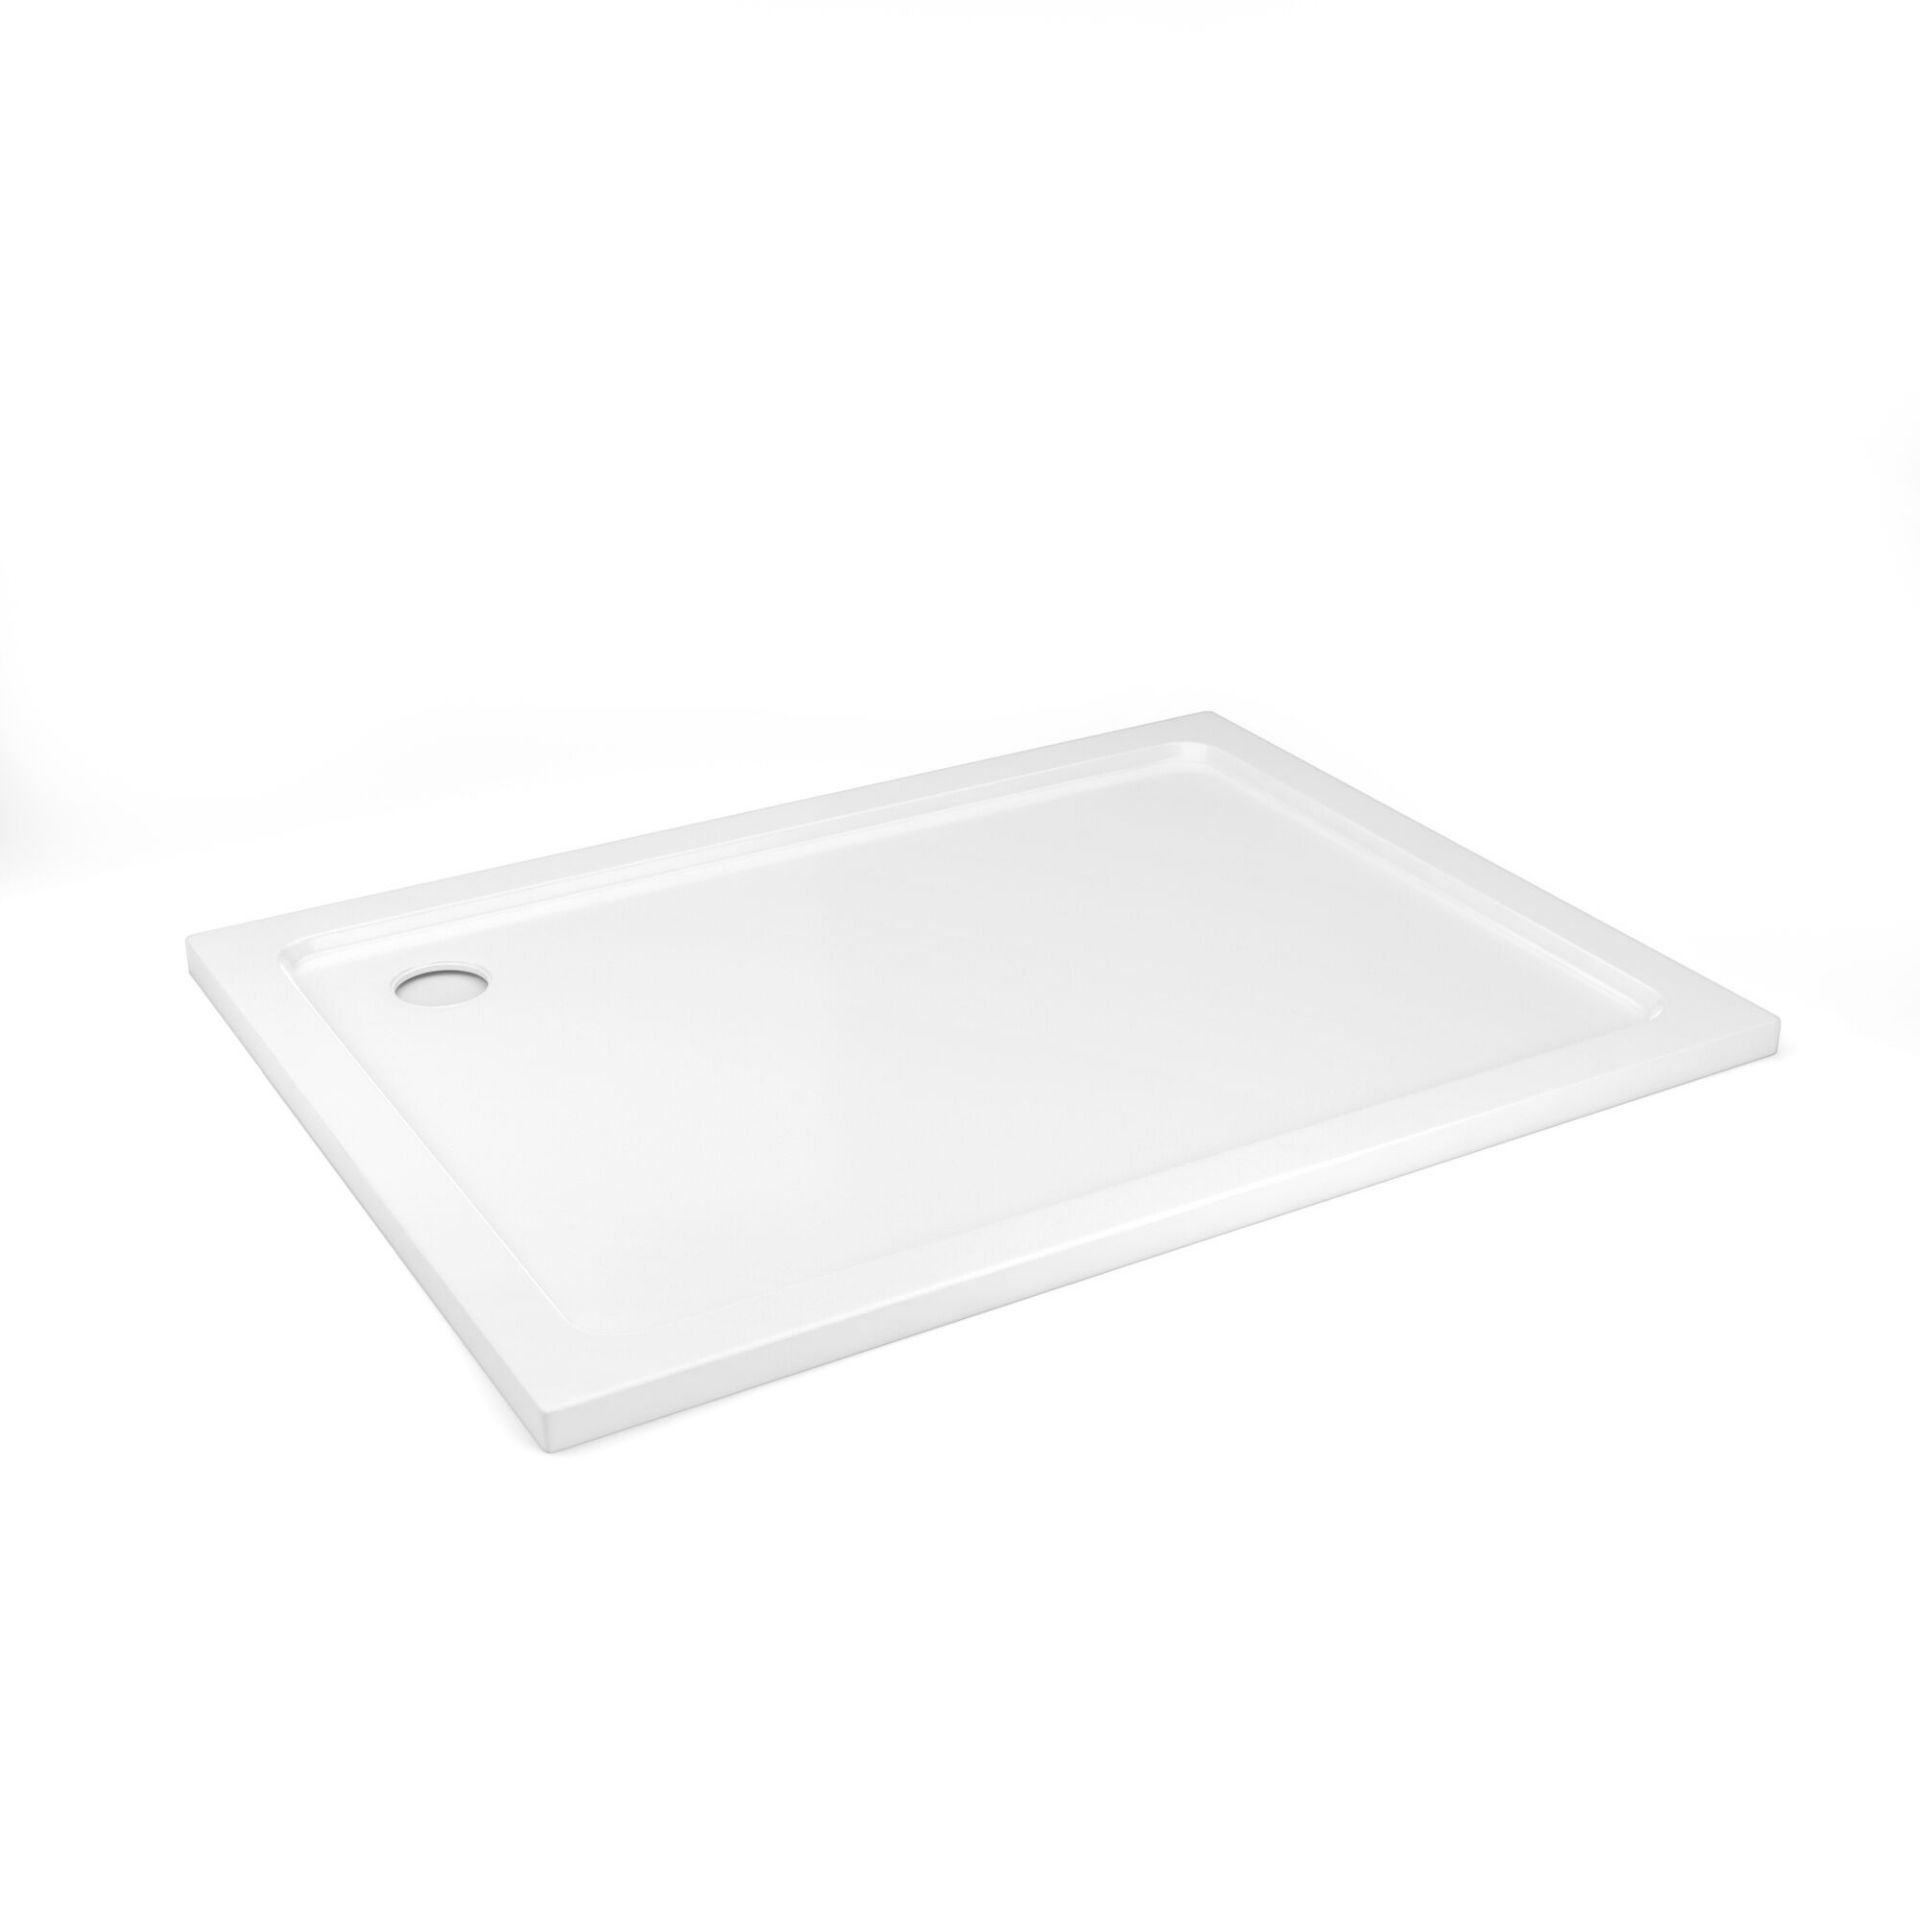 (KL148) 1200x900mm Rectangular Ultra Slim Stone Shower Tray. Low profile ultra slim design Gel - Image 2 of 2